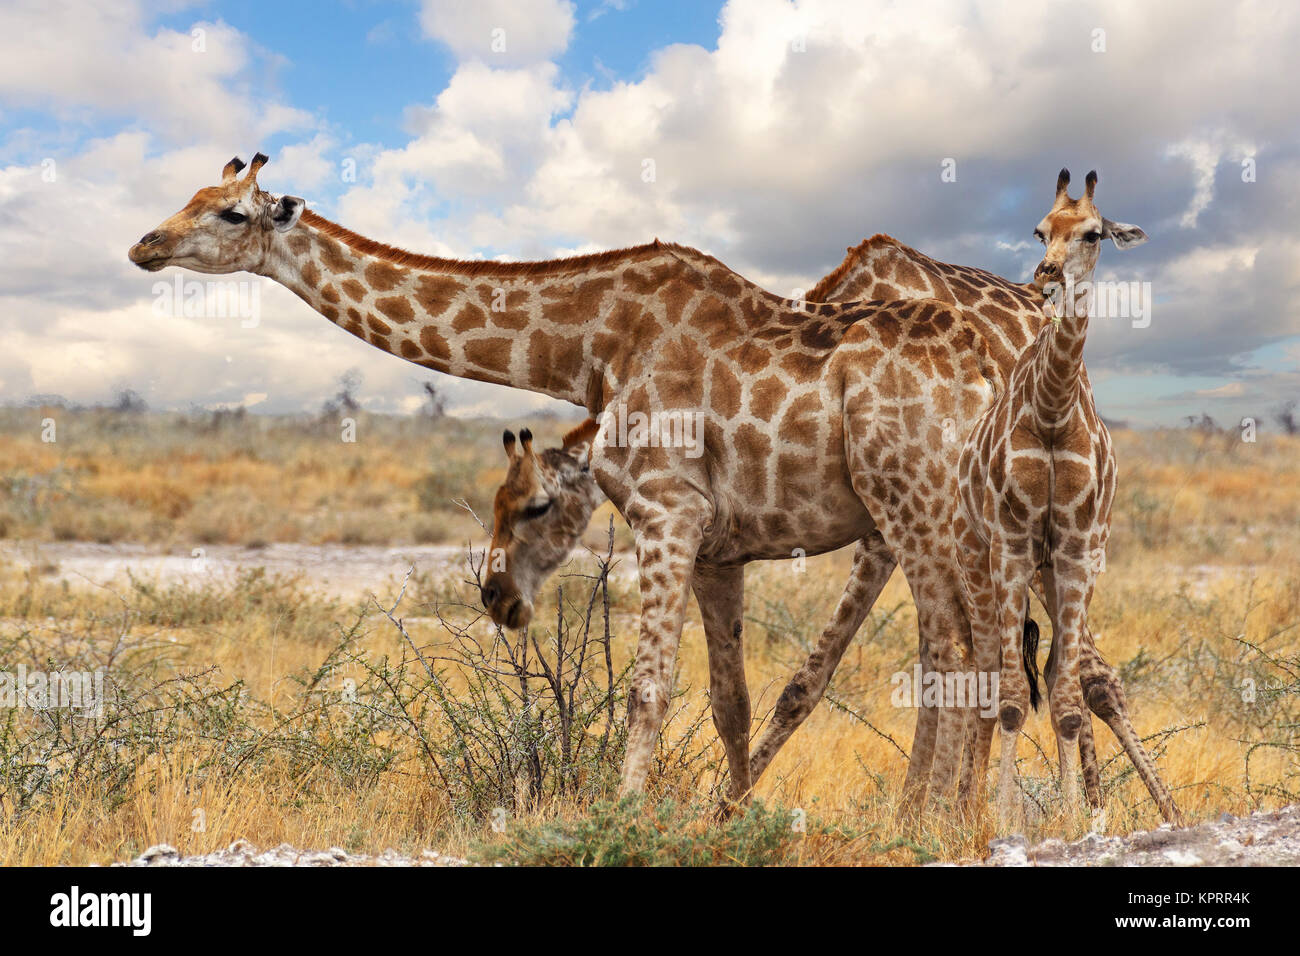 giraffe with calf grazzing Stock Photo